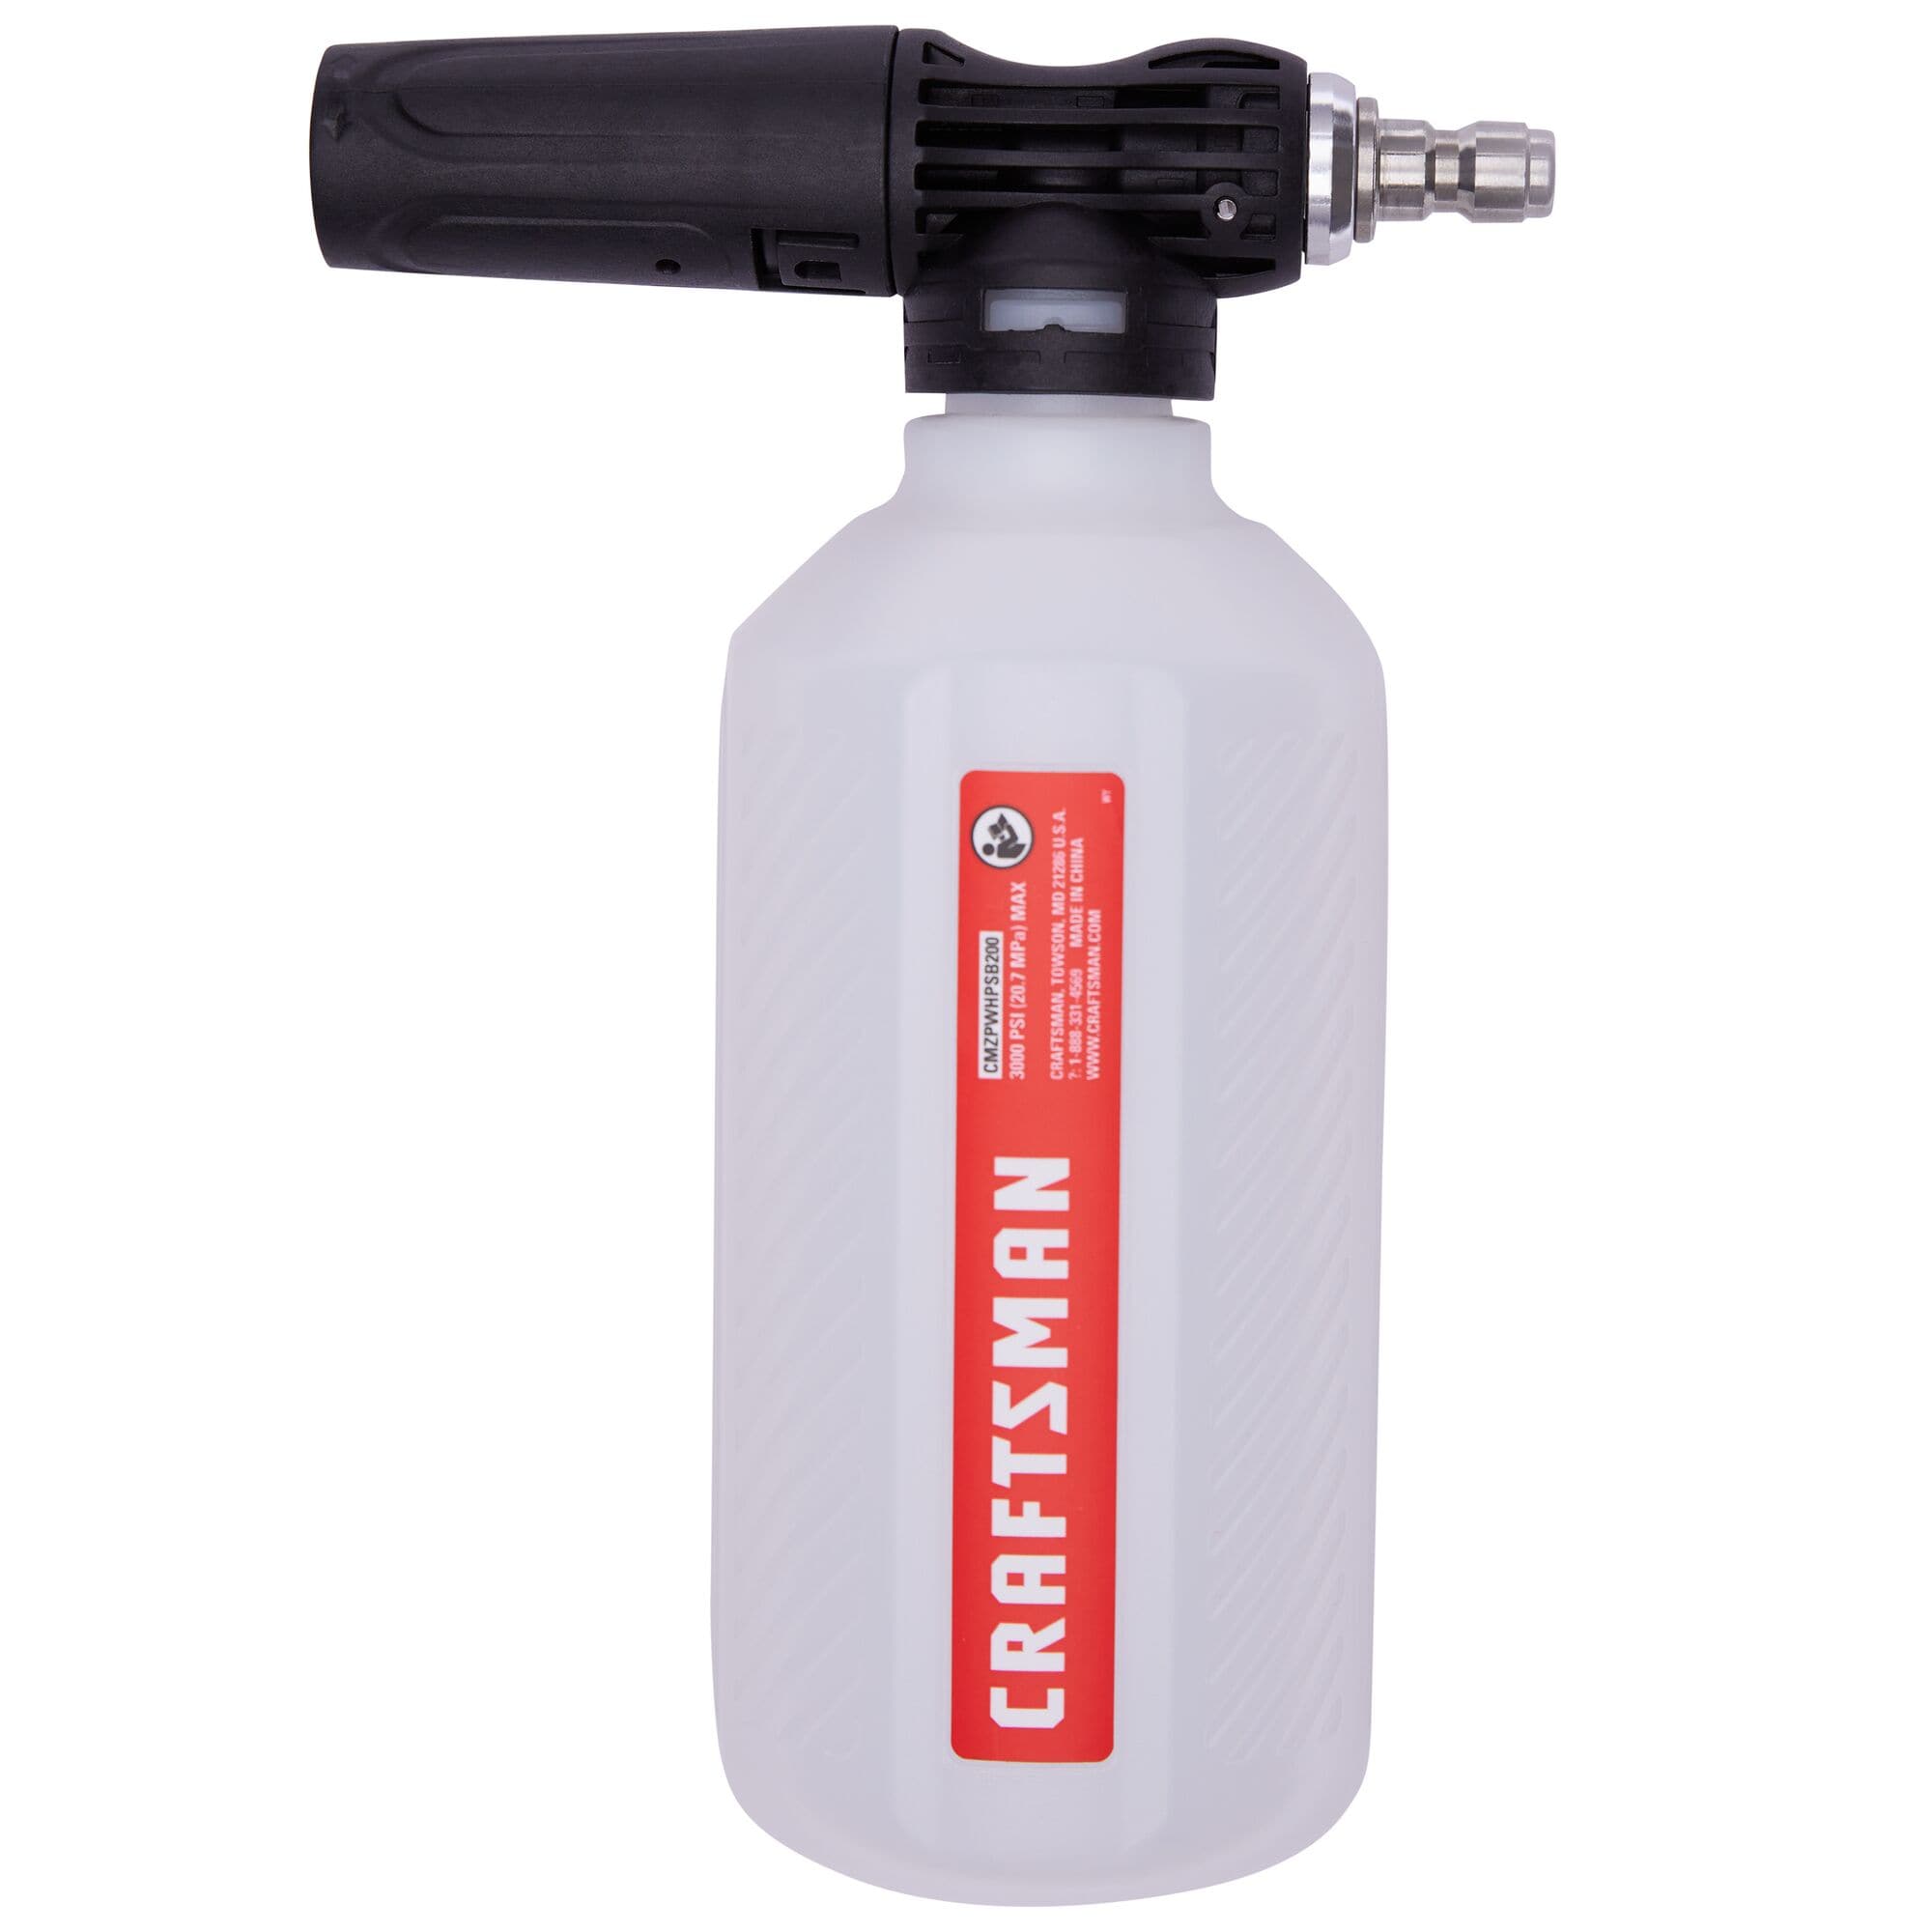 Power Pressure Washer Attachment Sprayer Dispenser Car Wash Soap